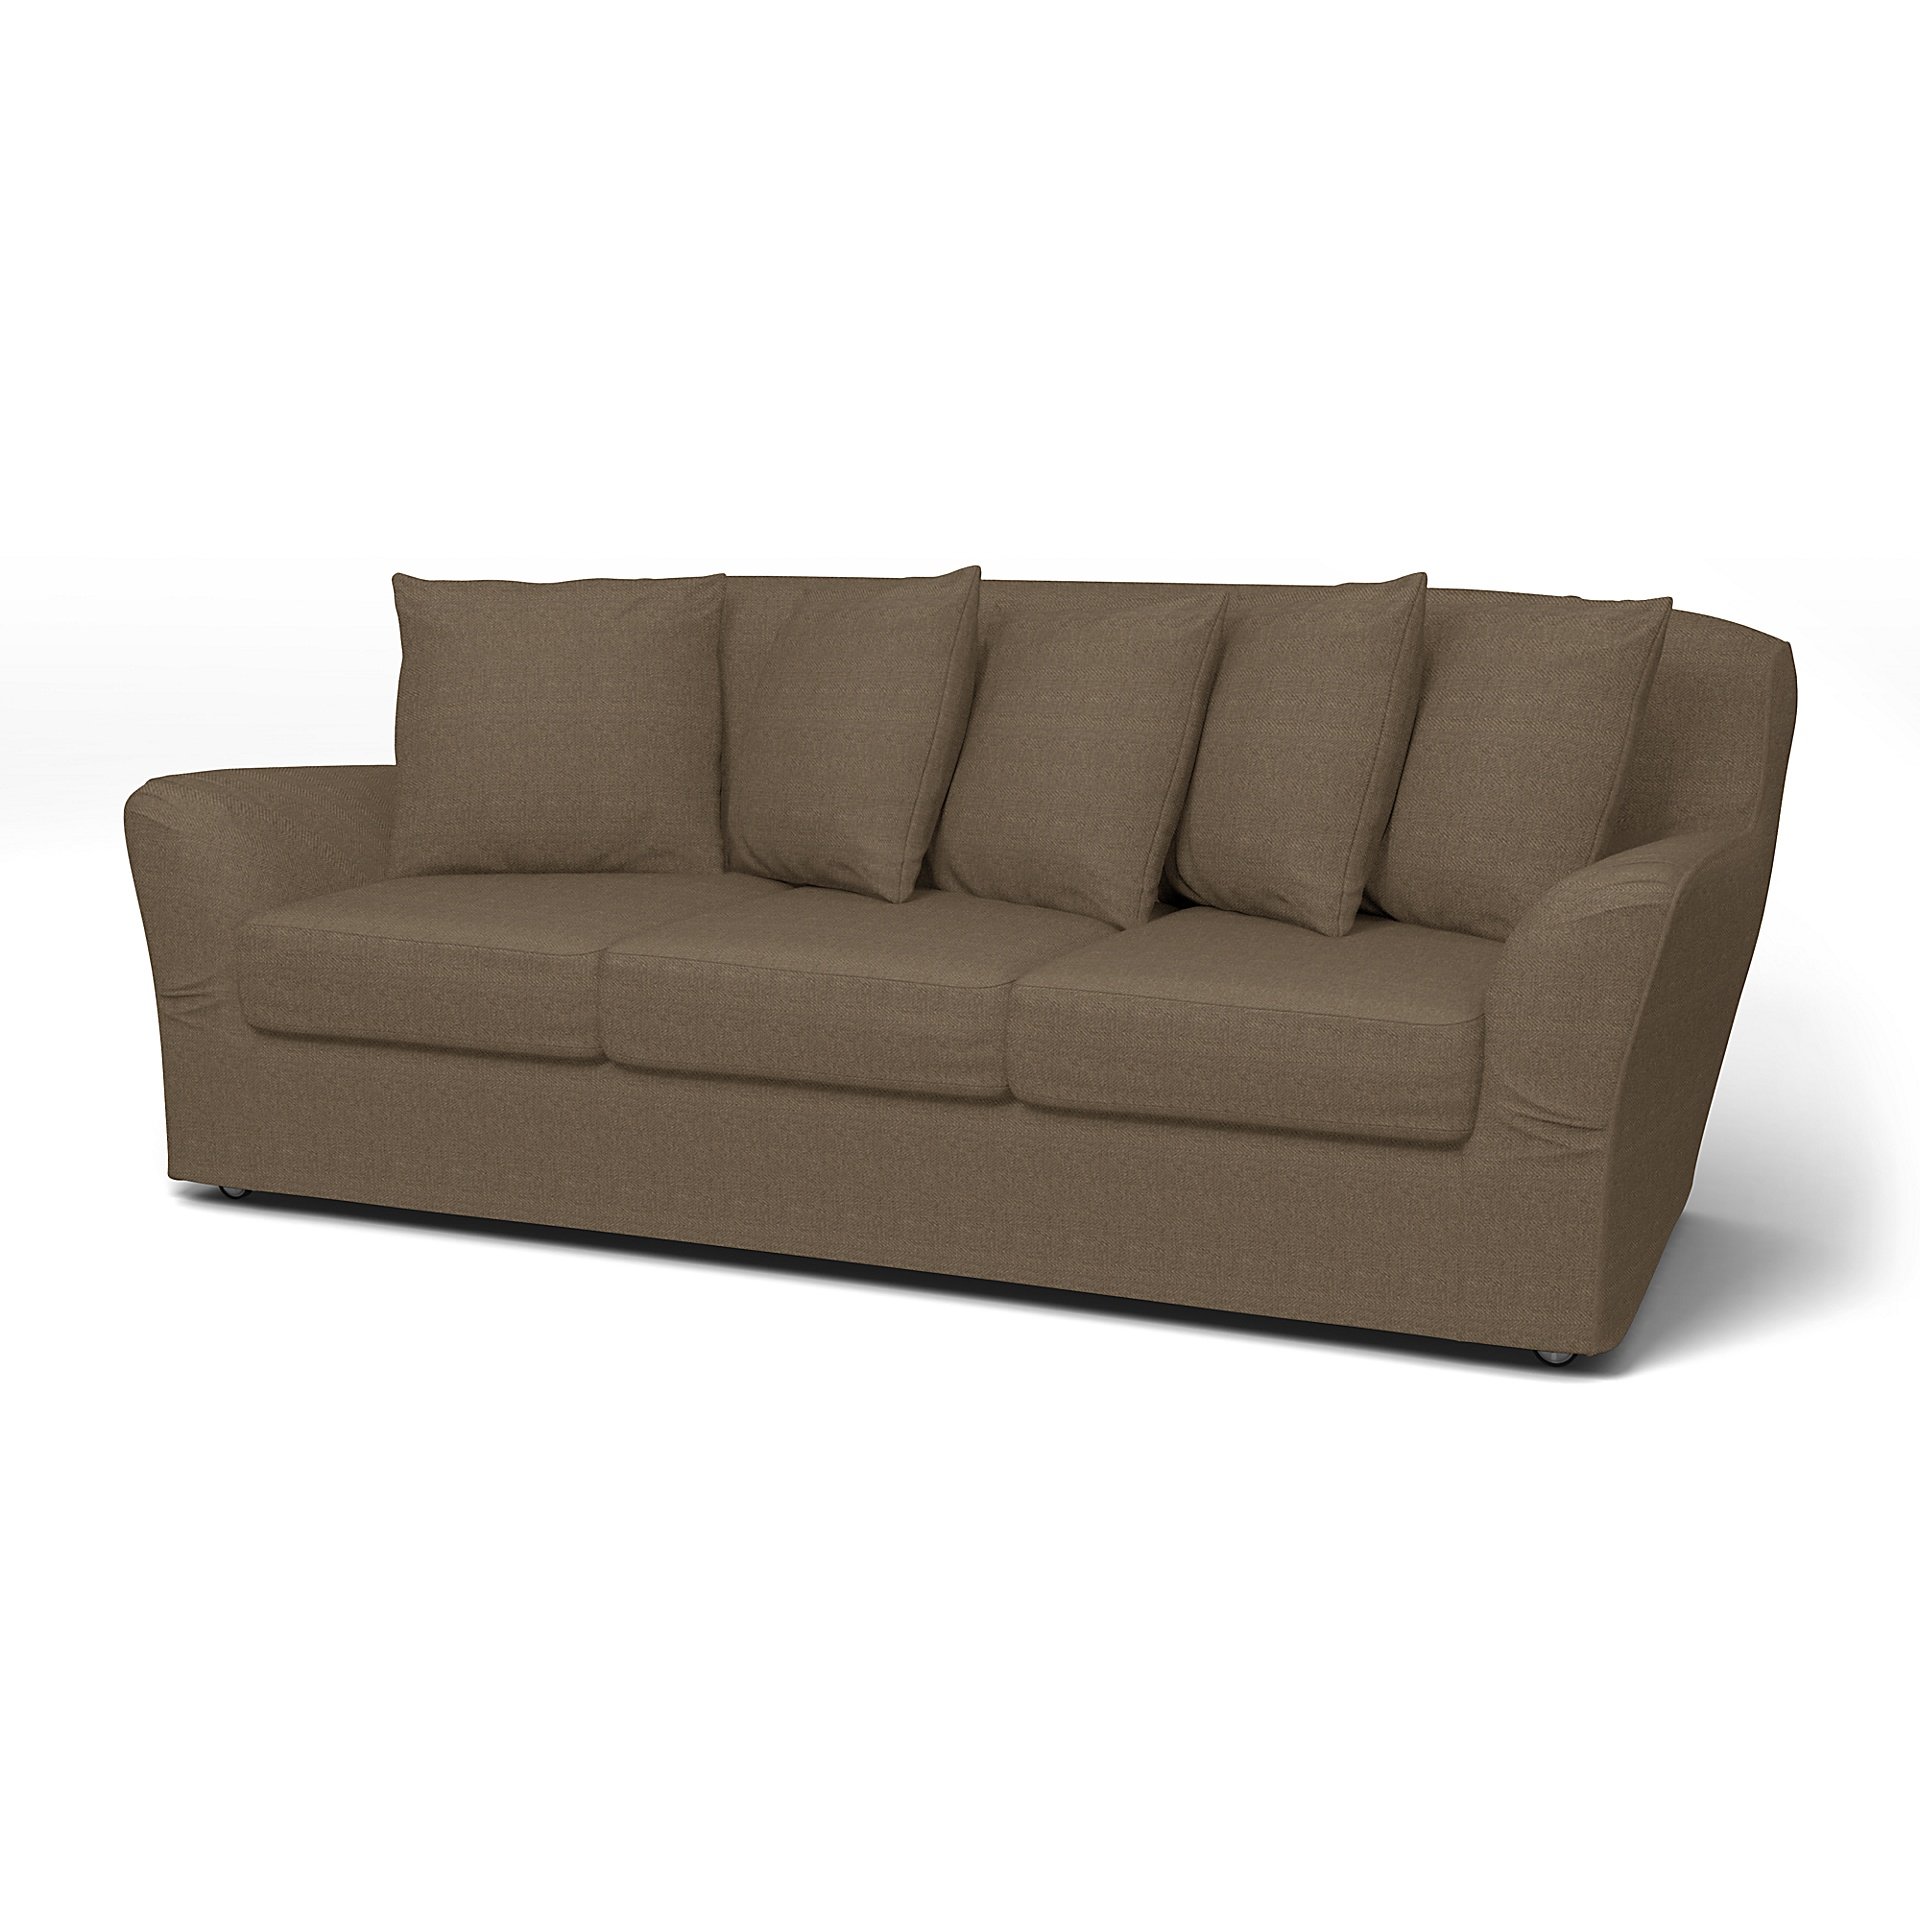 IKEA - Tomelilla 3 seater sofa, Dark Taupe, Boucle & Texture - Bemz